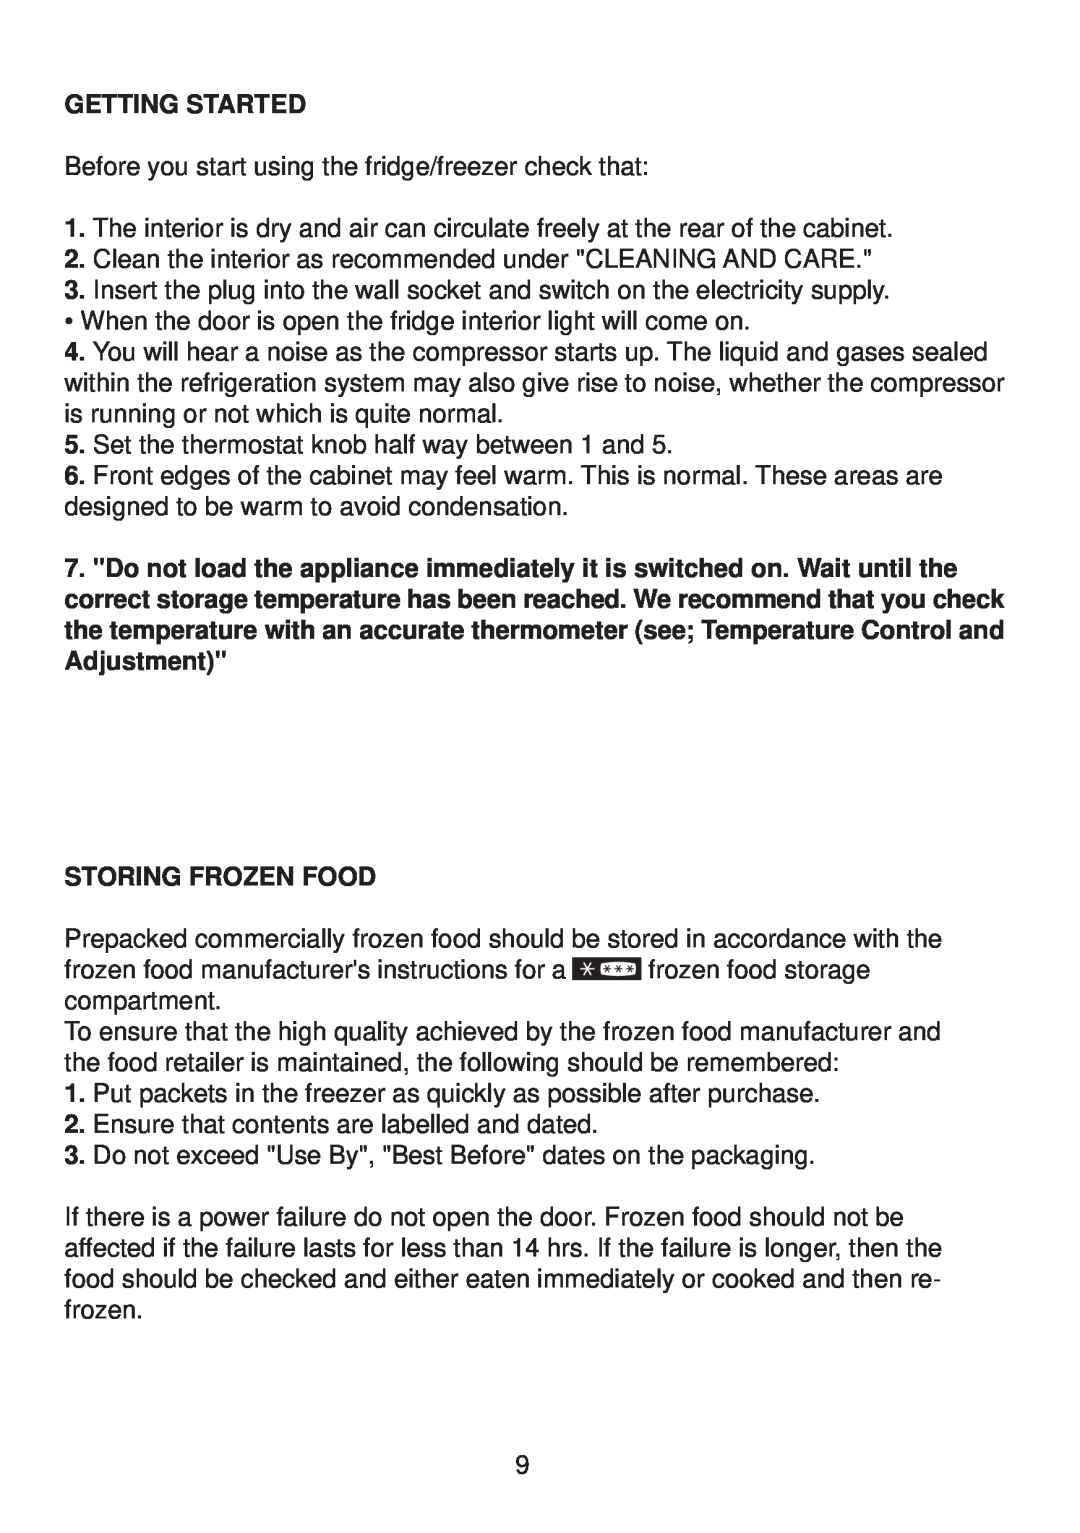 Glen Dimplex Home Appliances Ltd BE817 manual Getting Started, Storing Frozen Food 